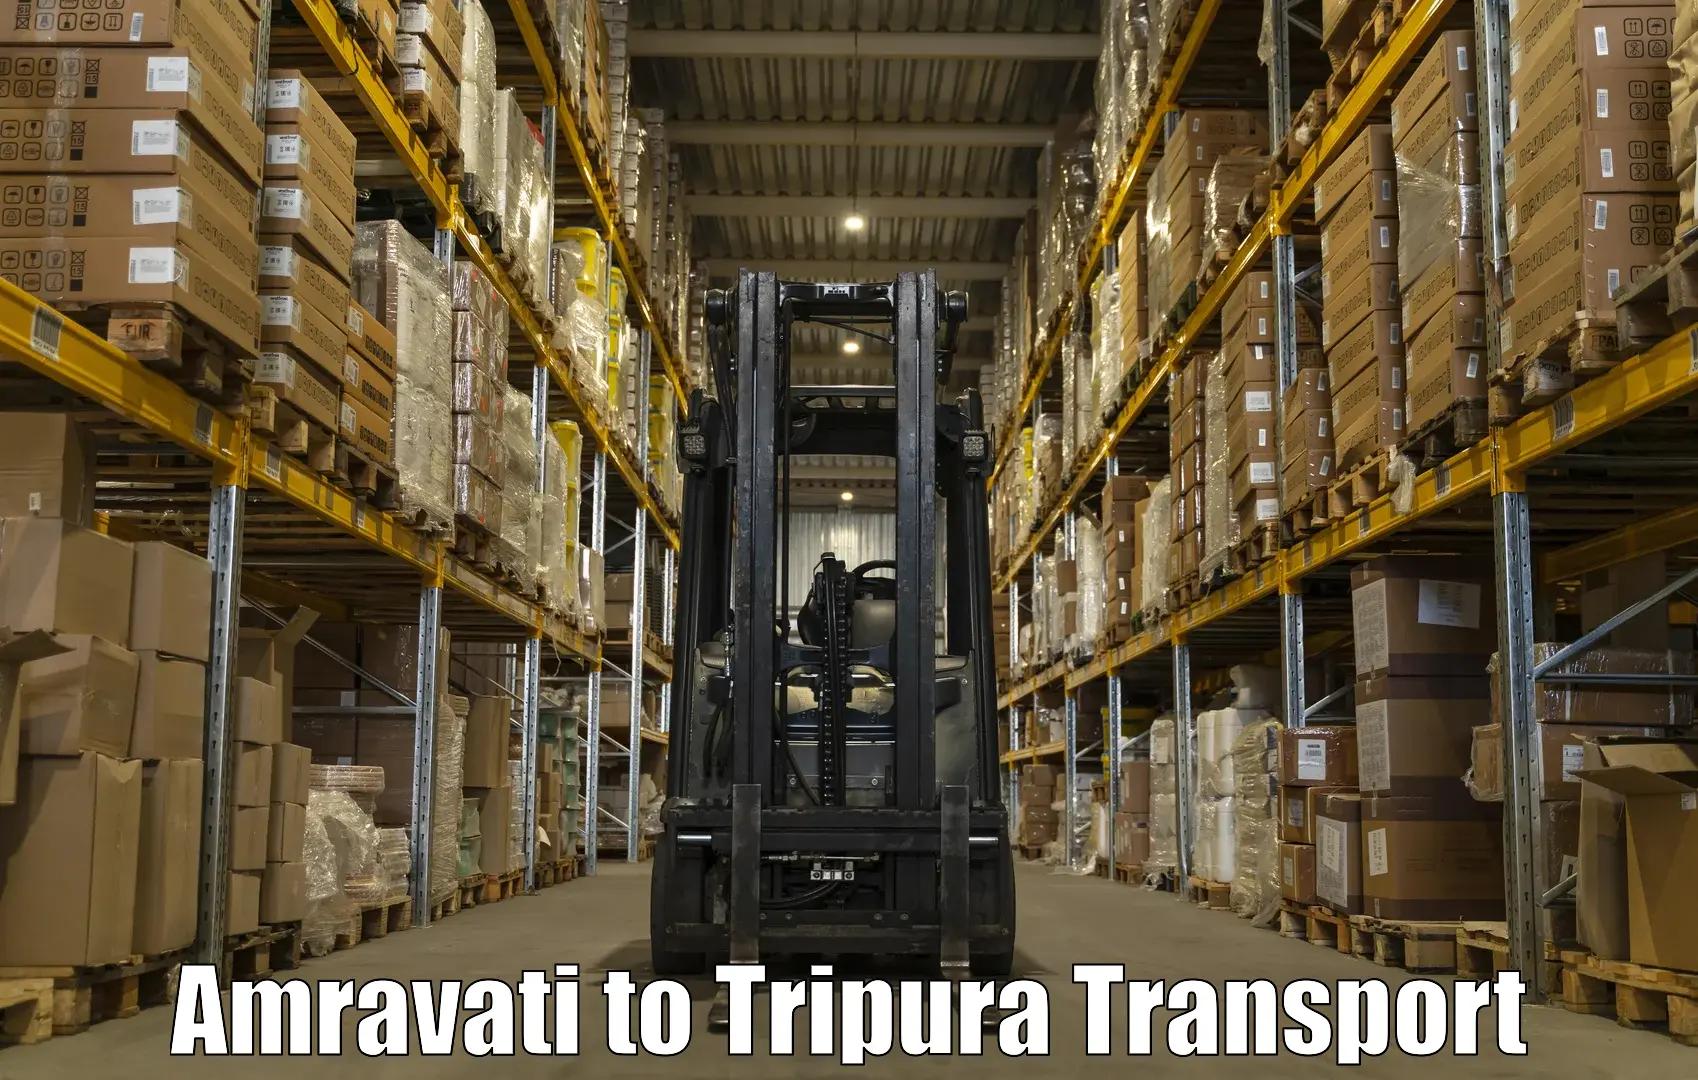 Online transport service Amravati to Udaipur Tripura